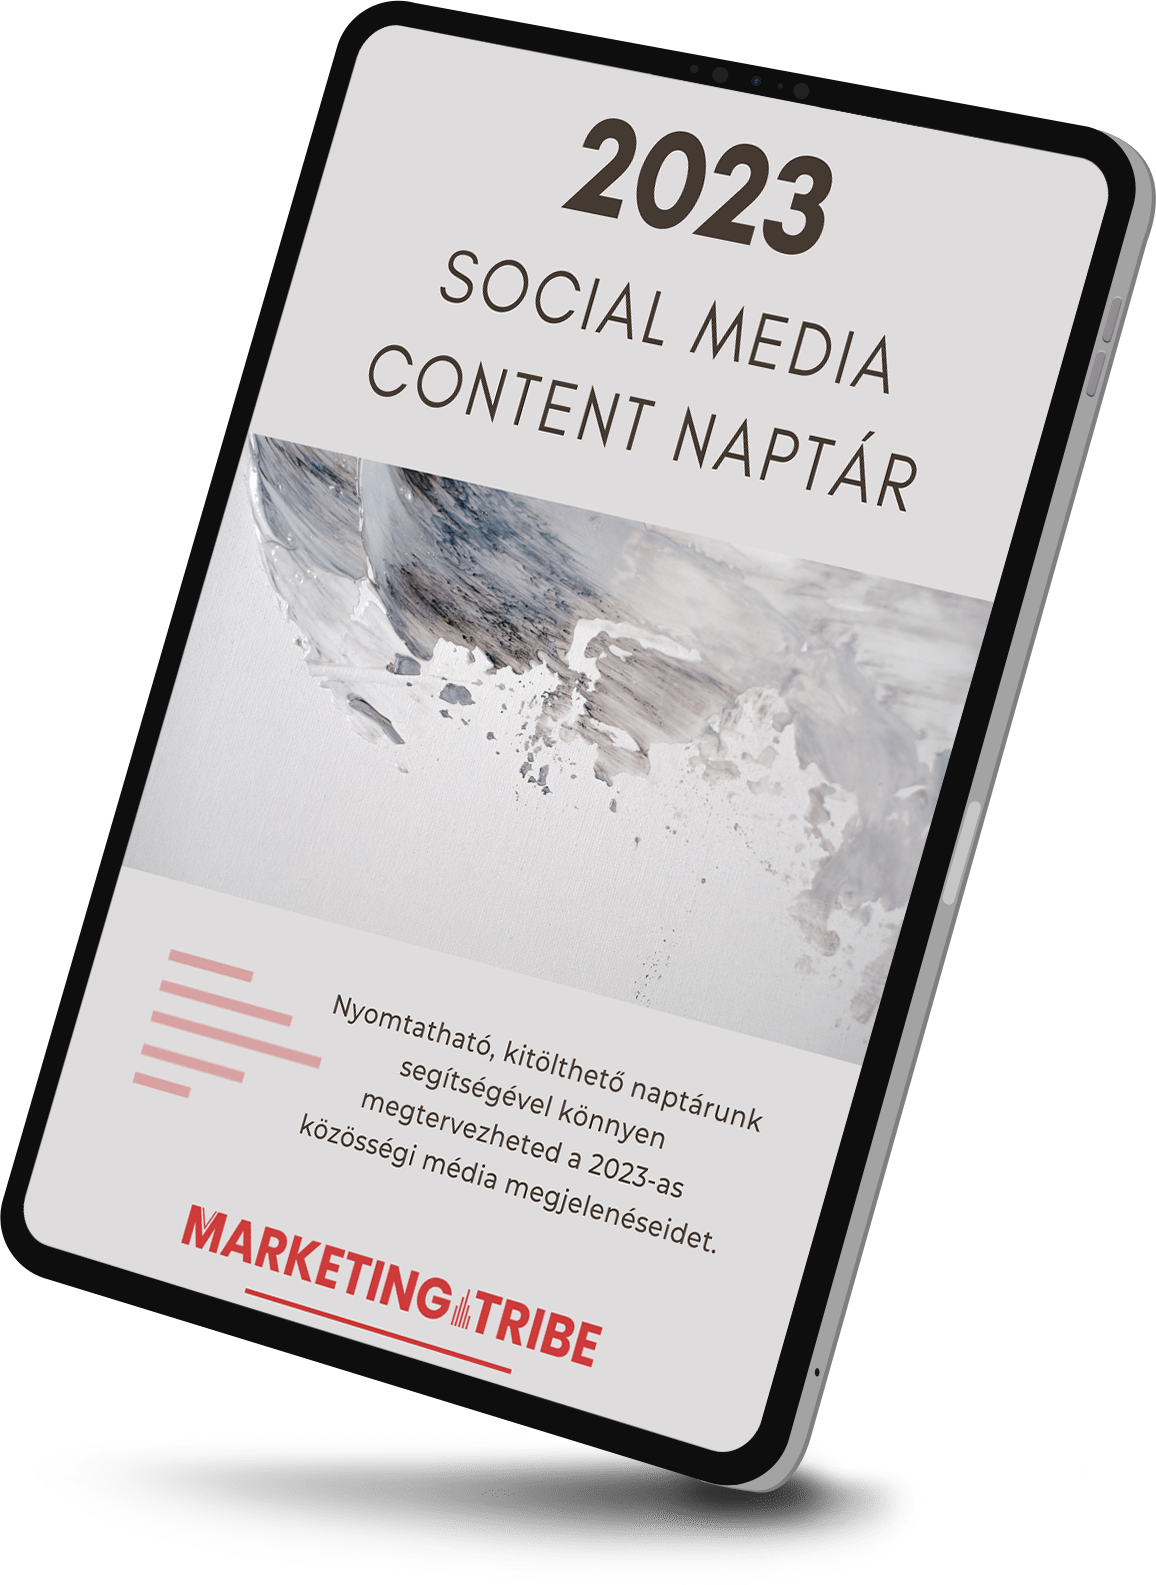 Marketing Tribe Social Media Content Calendar<br />
